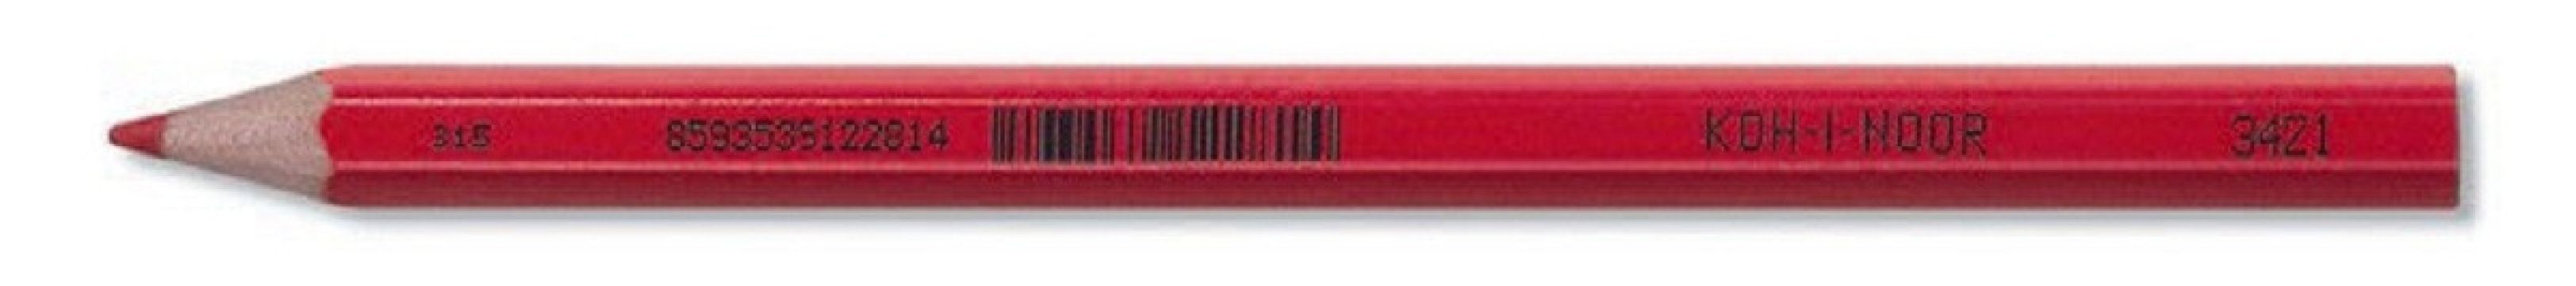 Ceruzka Koh-i-noor 3421 červená